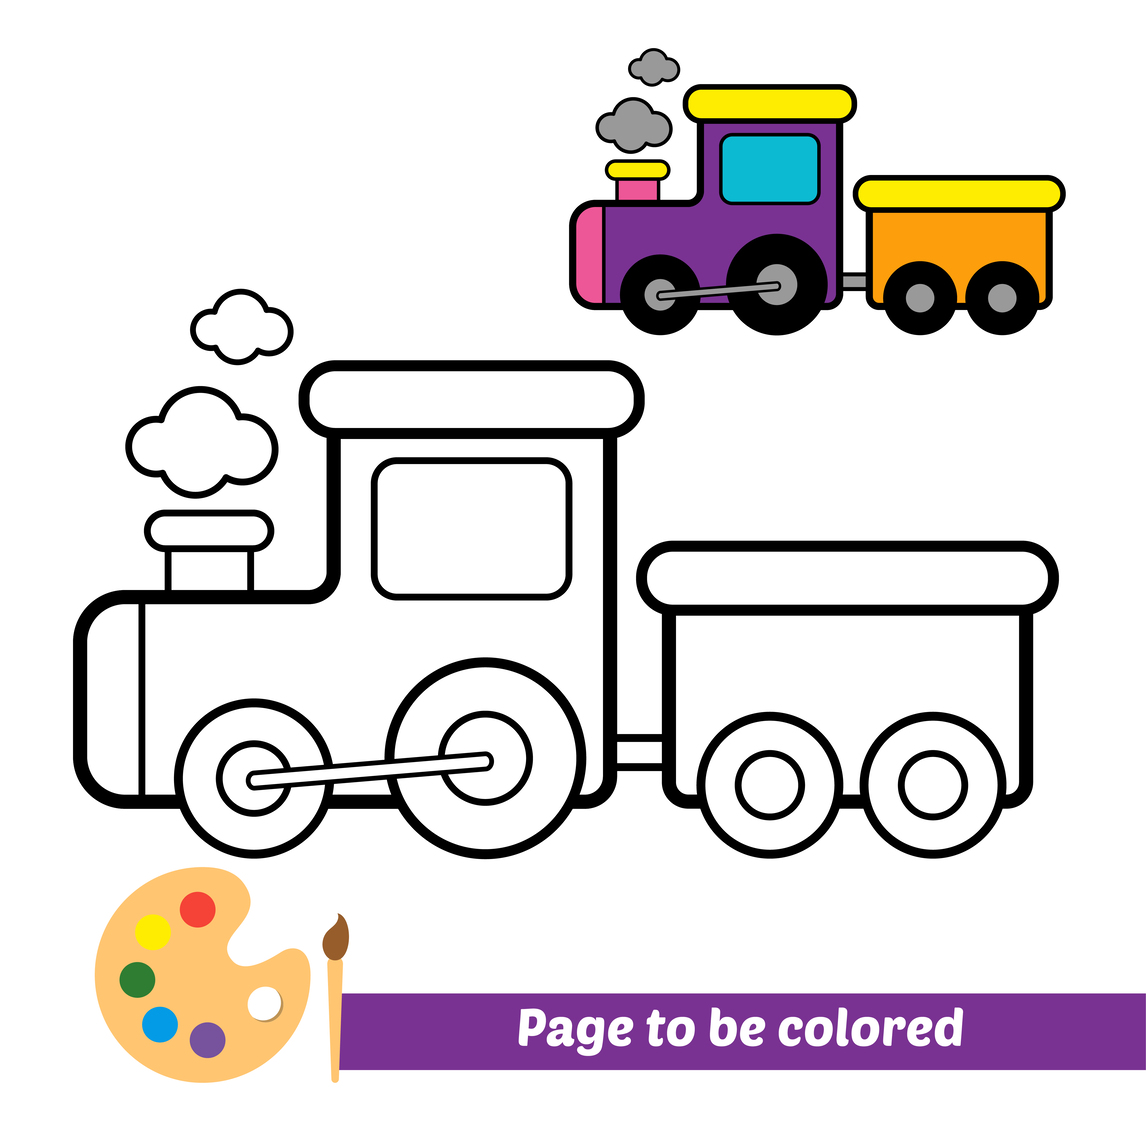 Vamos colorir o trem